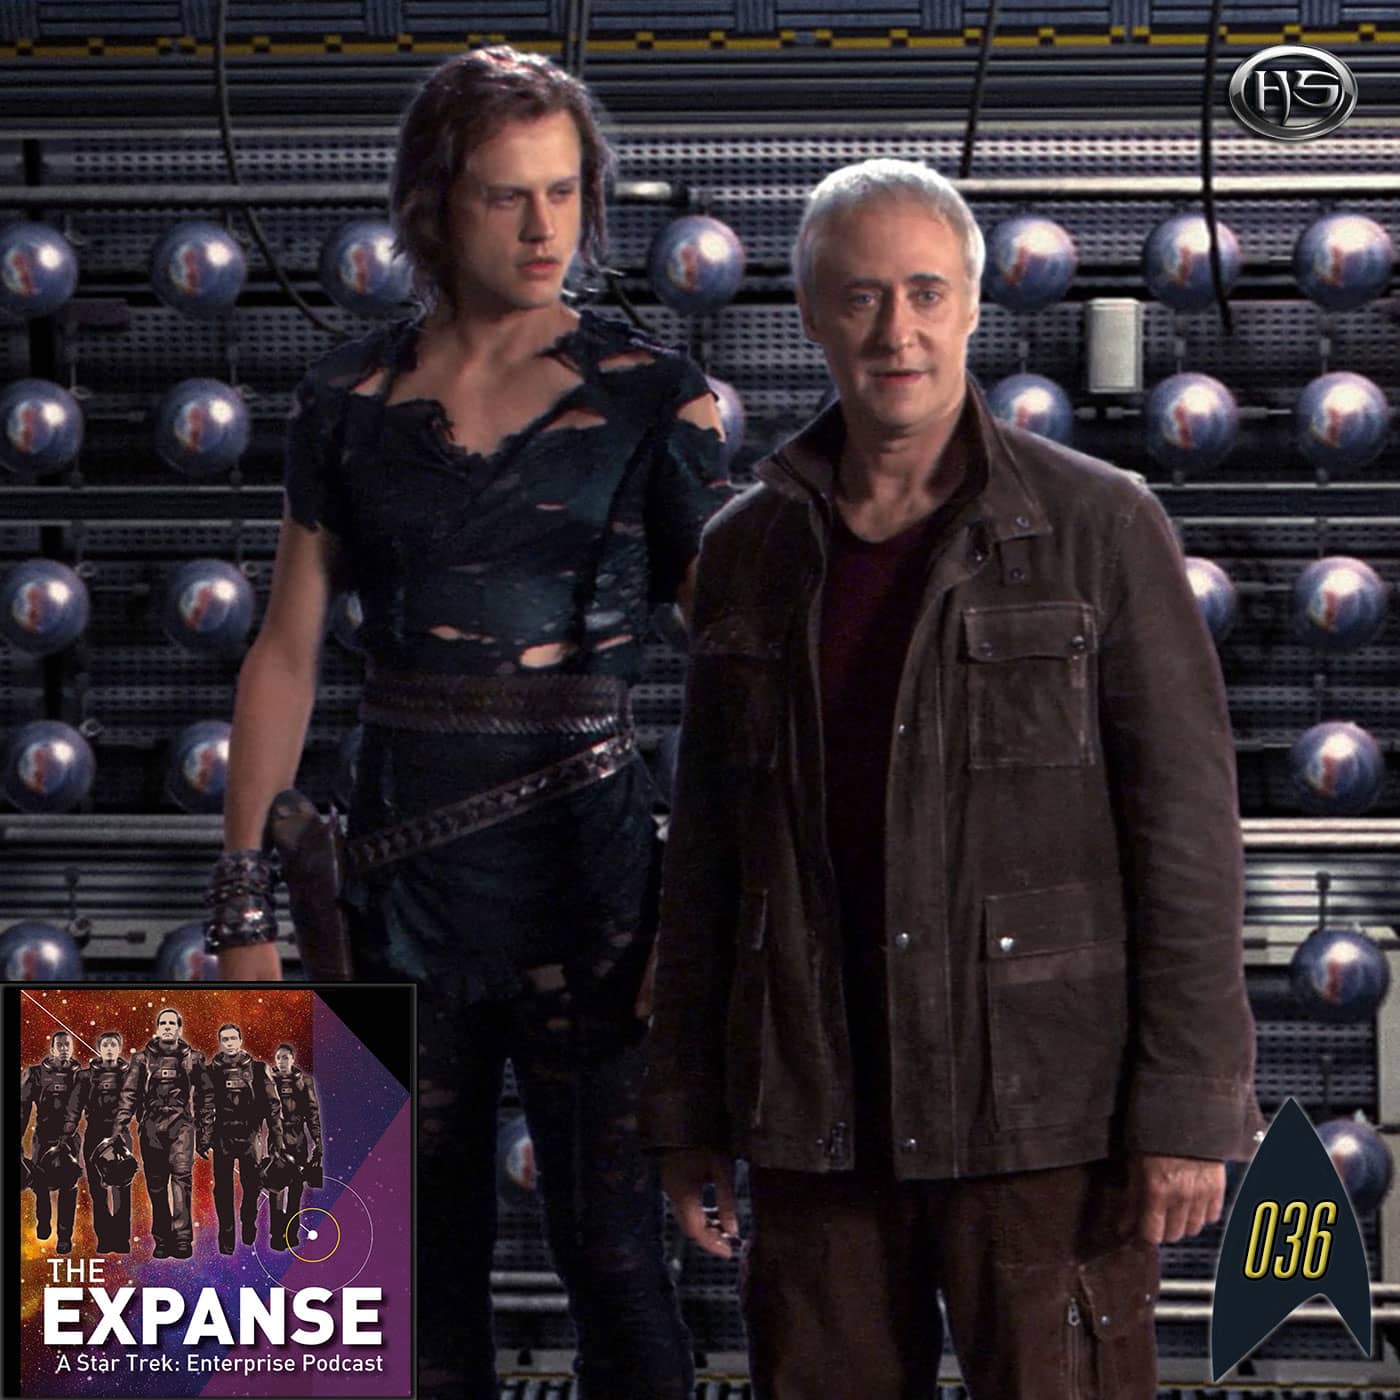 The Expanse Episode 36